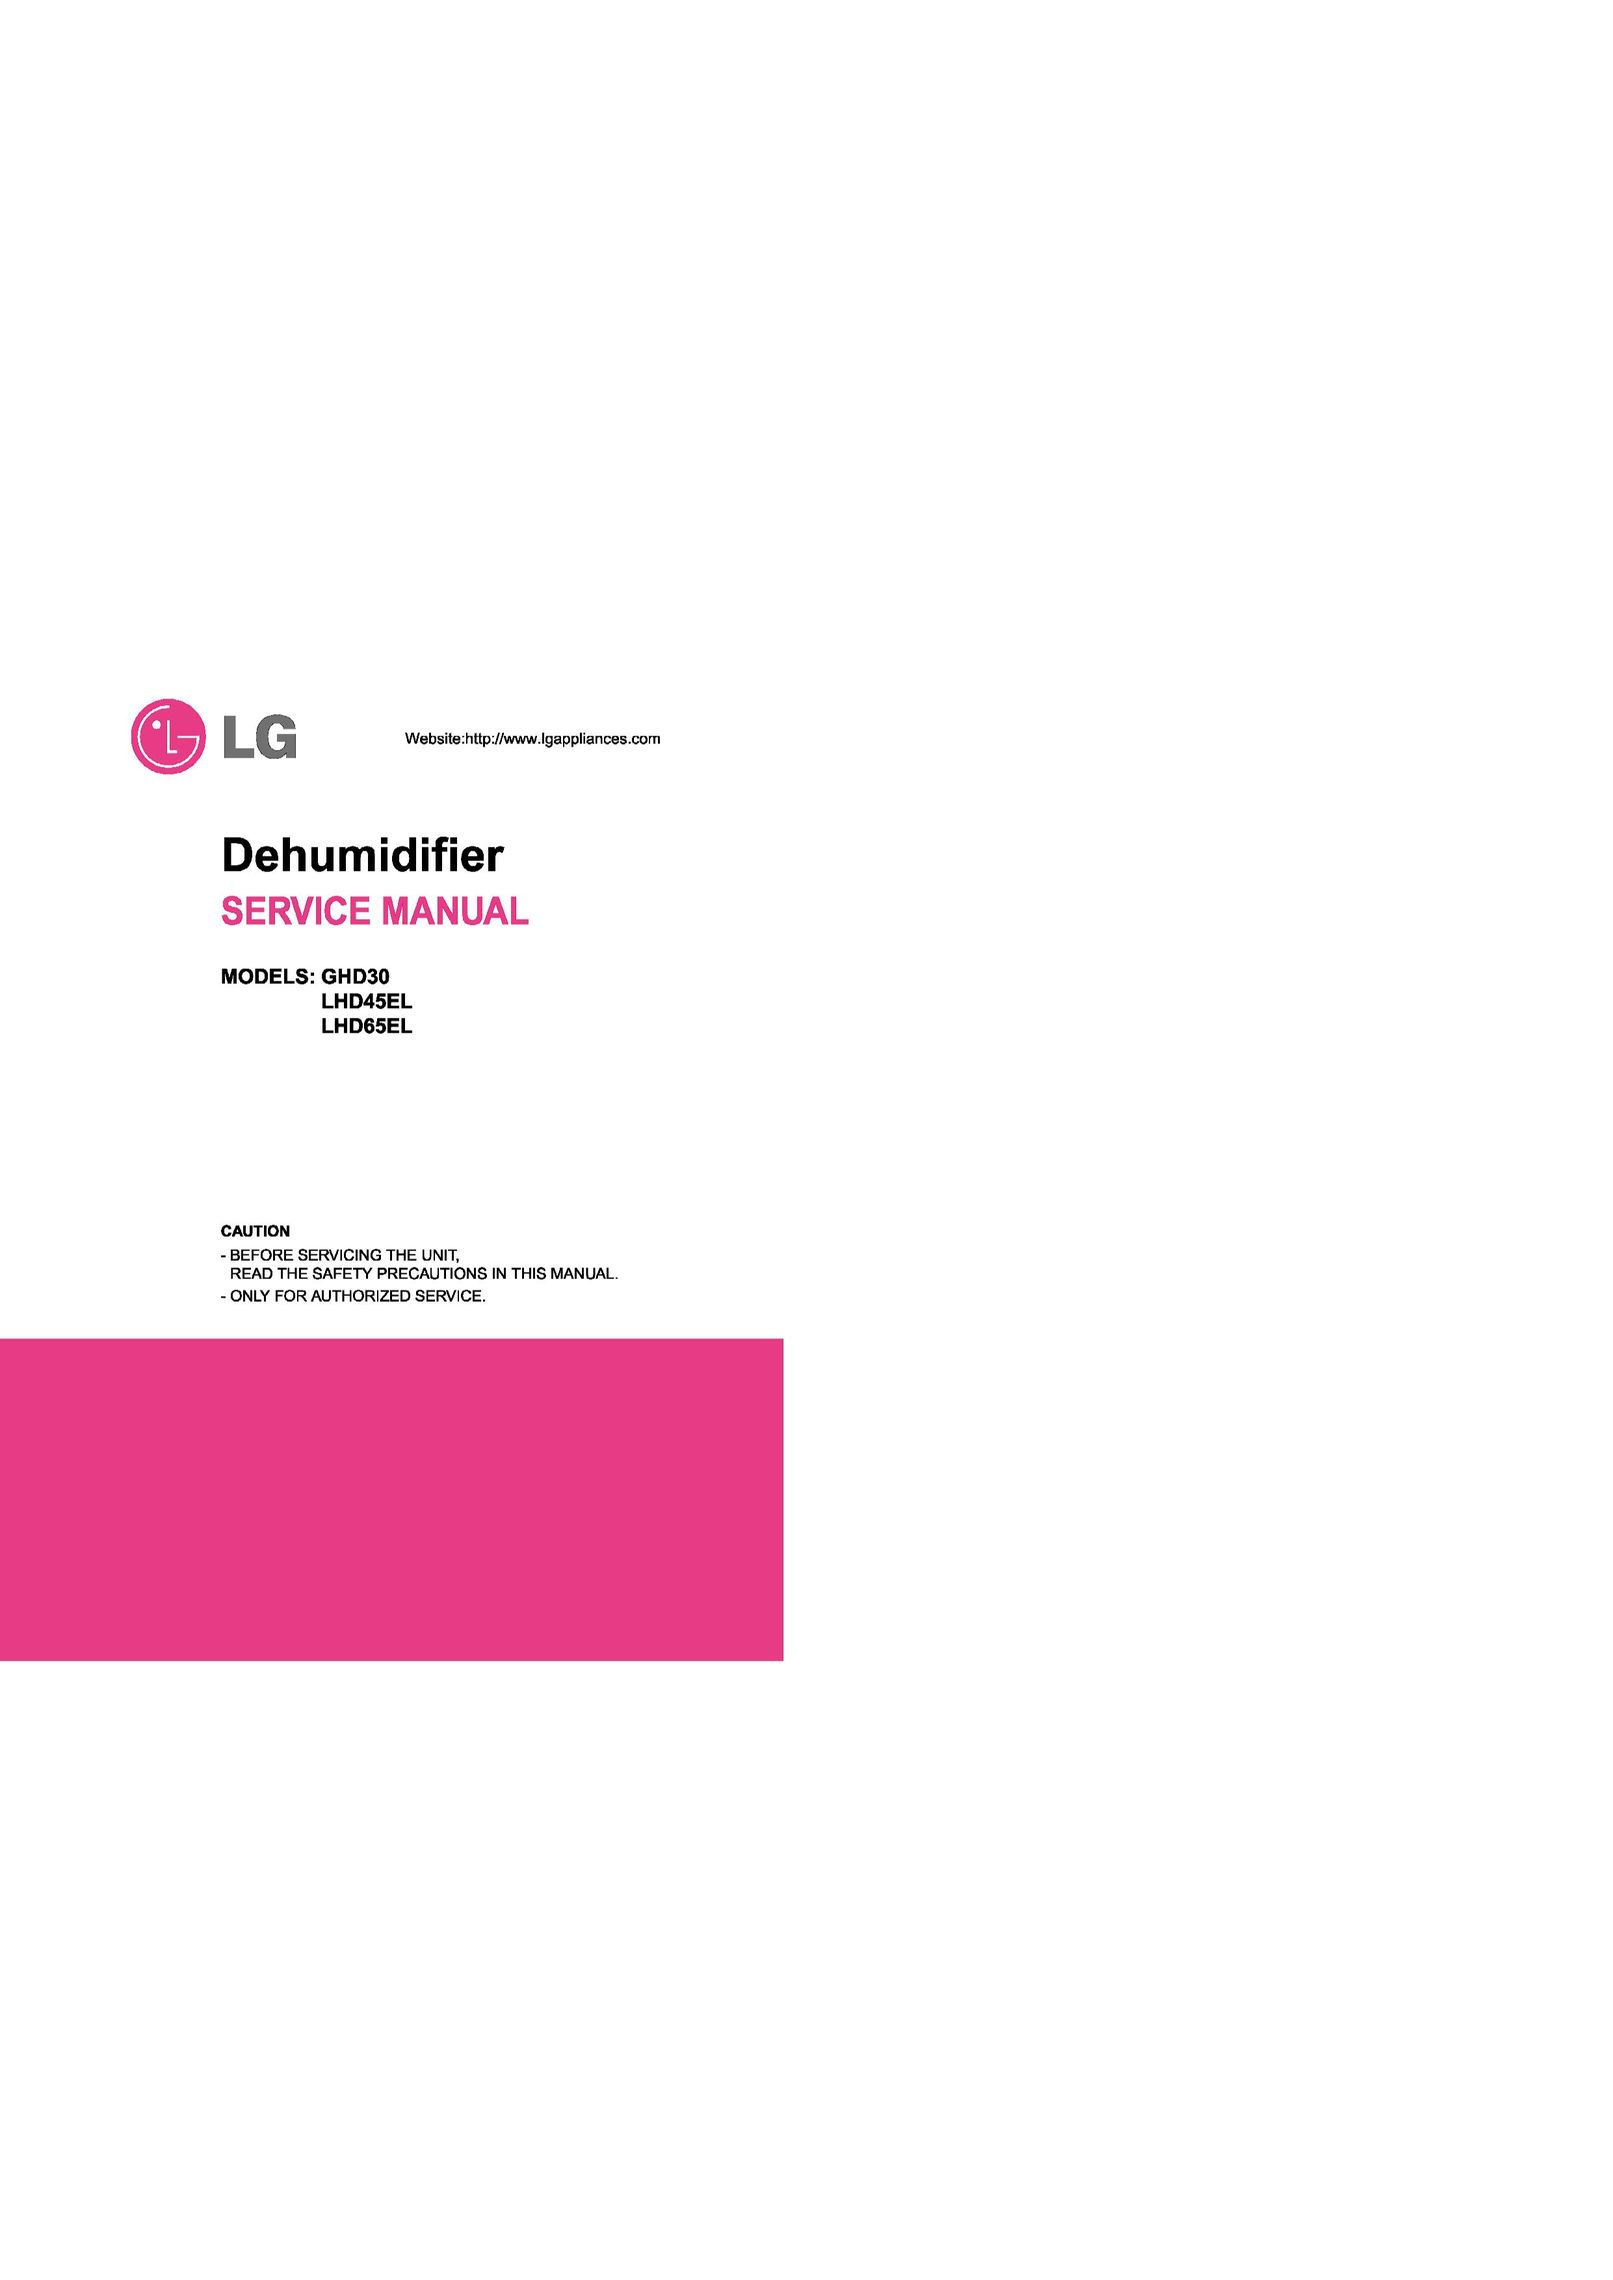 LG Electronics GHD30 Dehumidifier User Manual